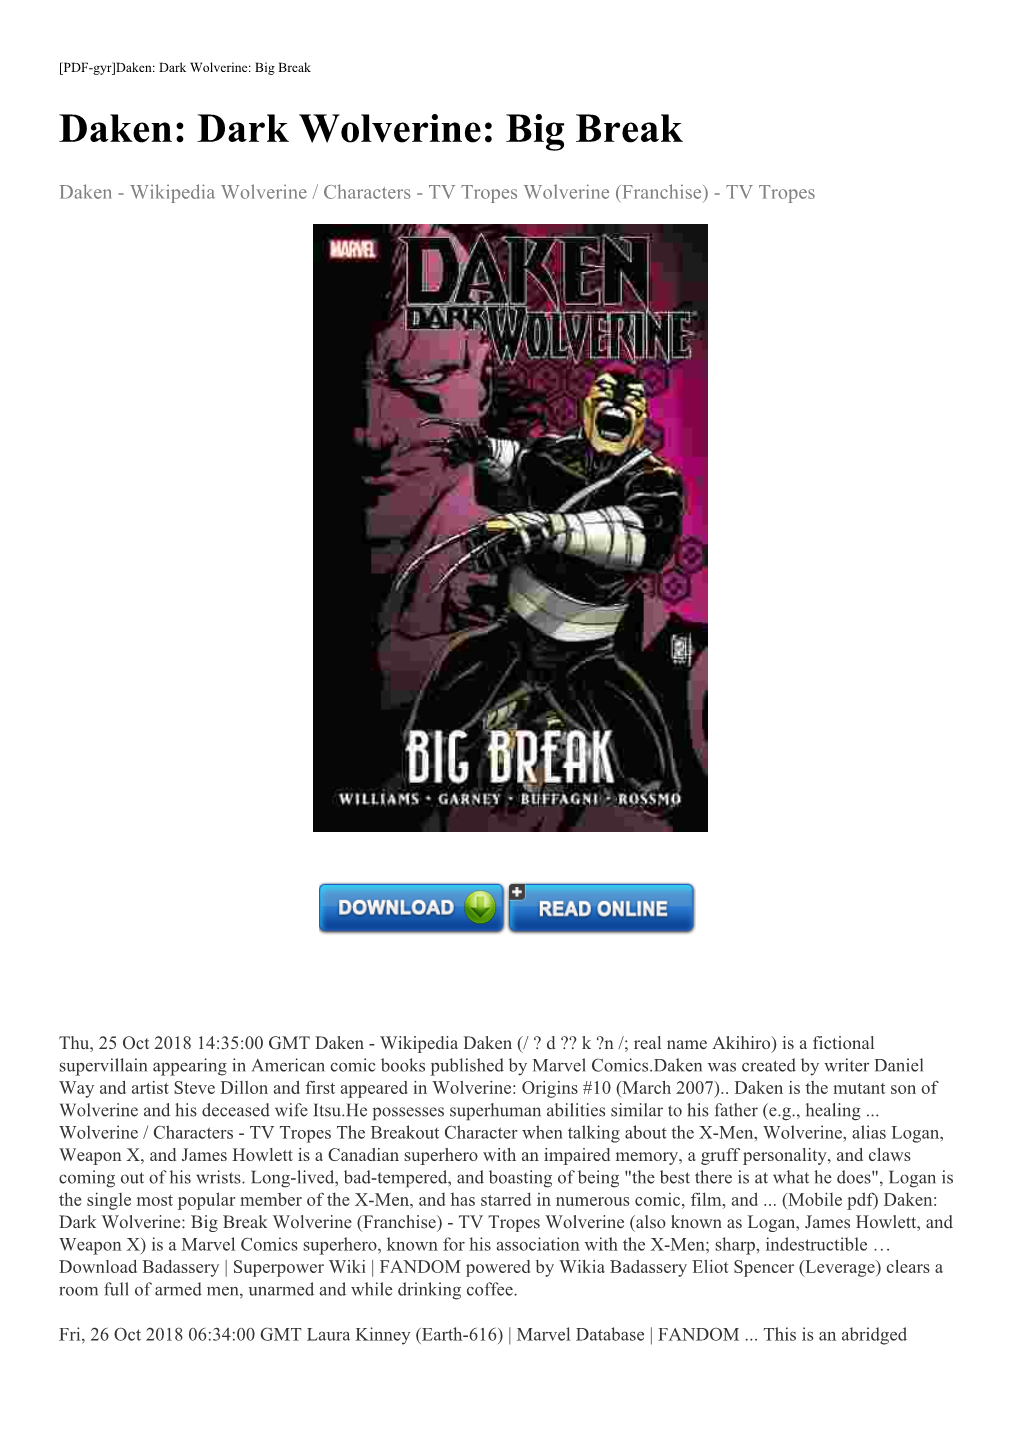 (Mobile Pdf) Daken: Dark Wolverine: Big Break